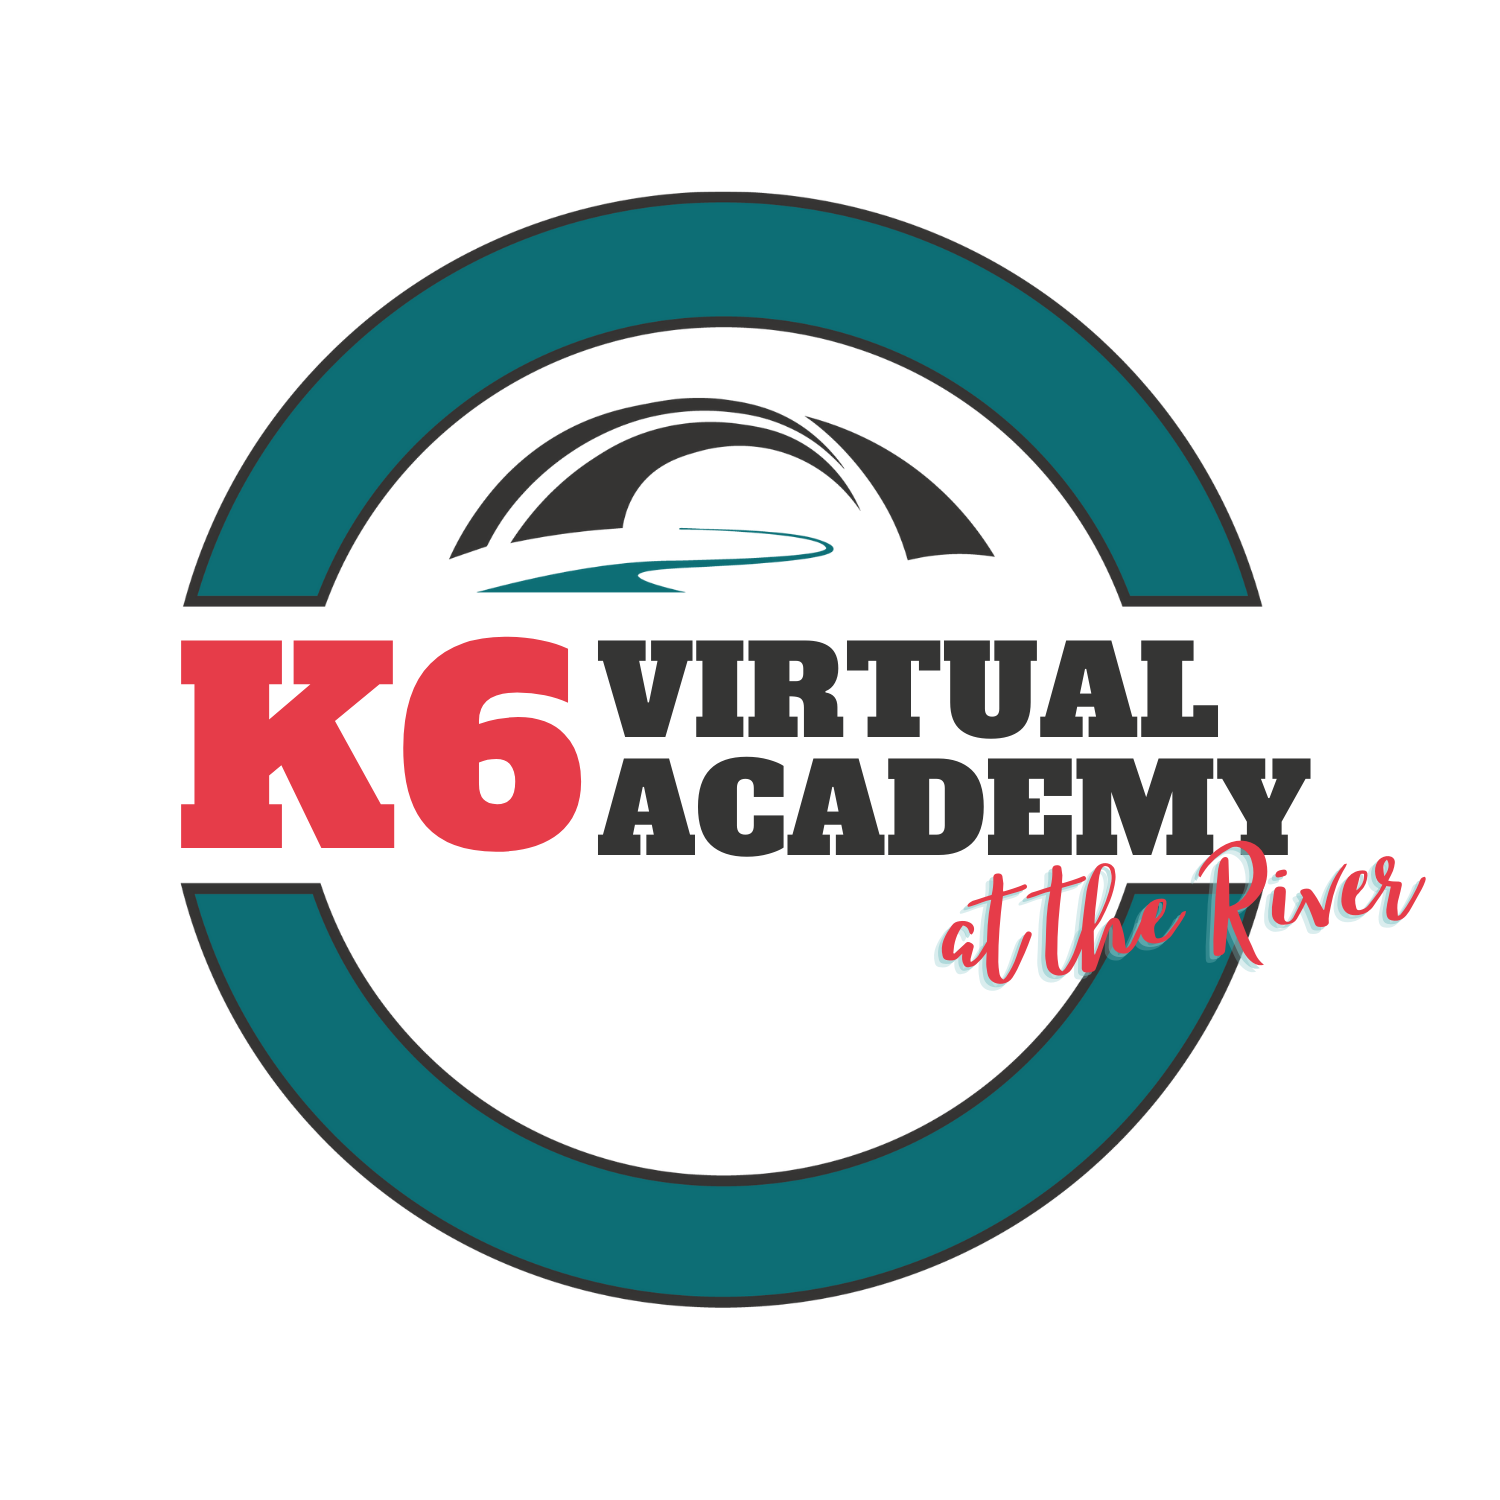 K-6 Virtual Academy at the River